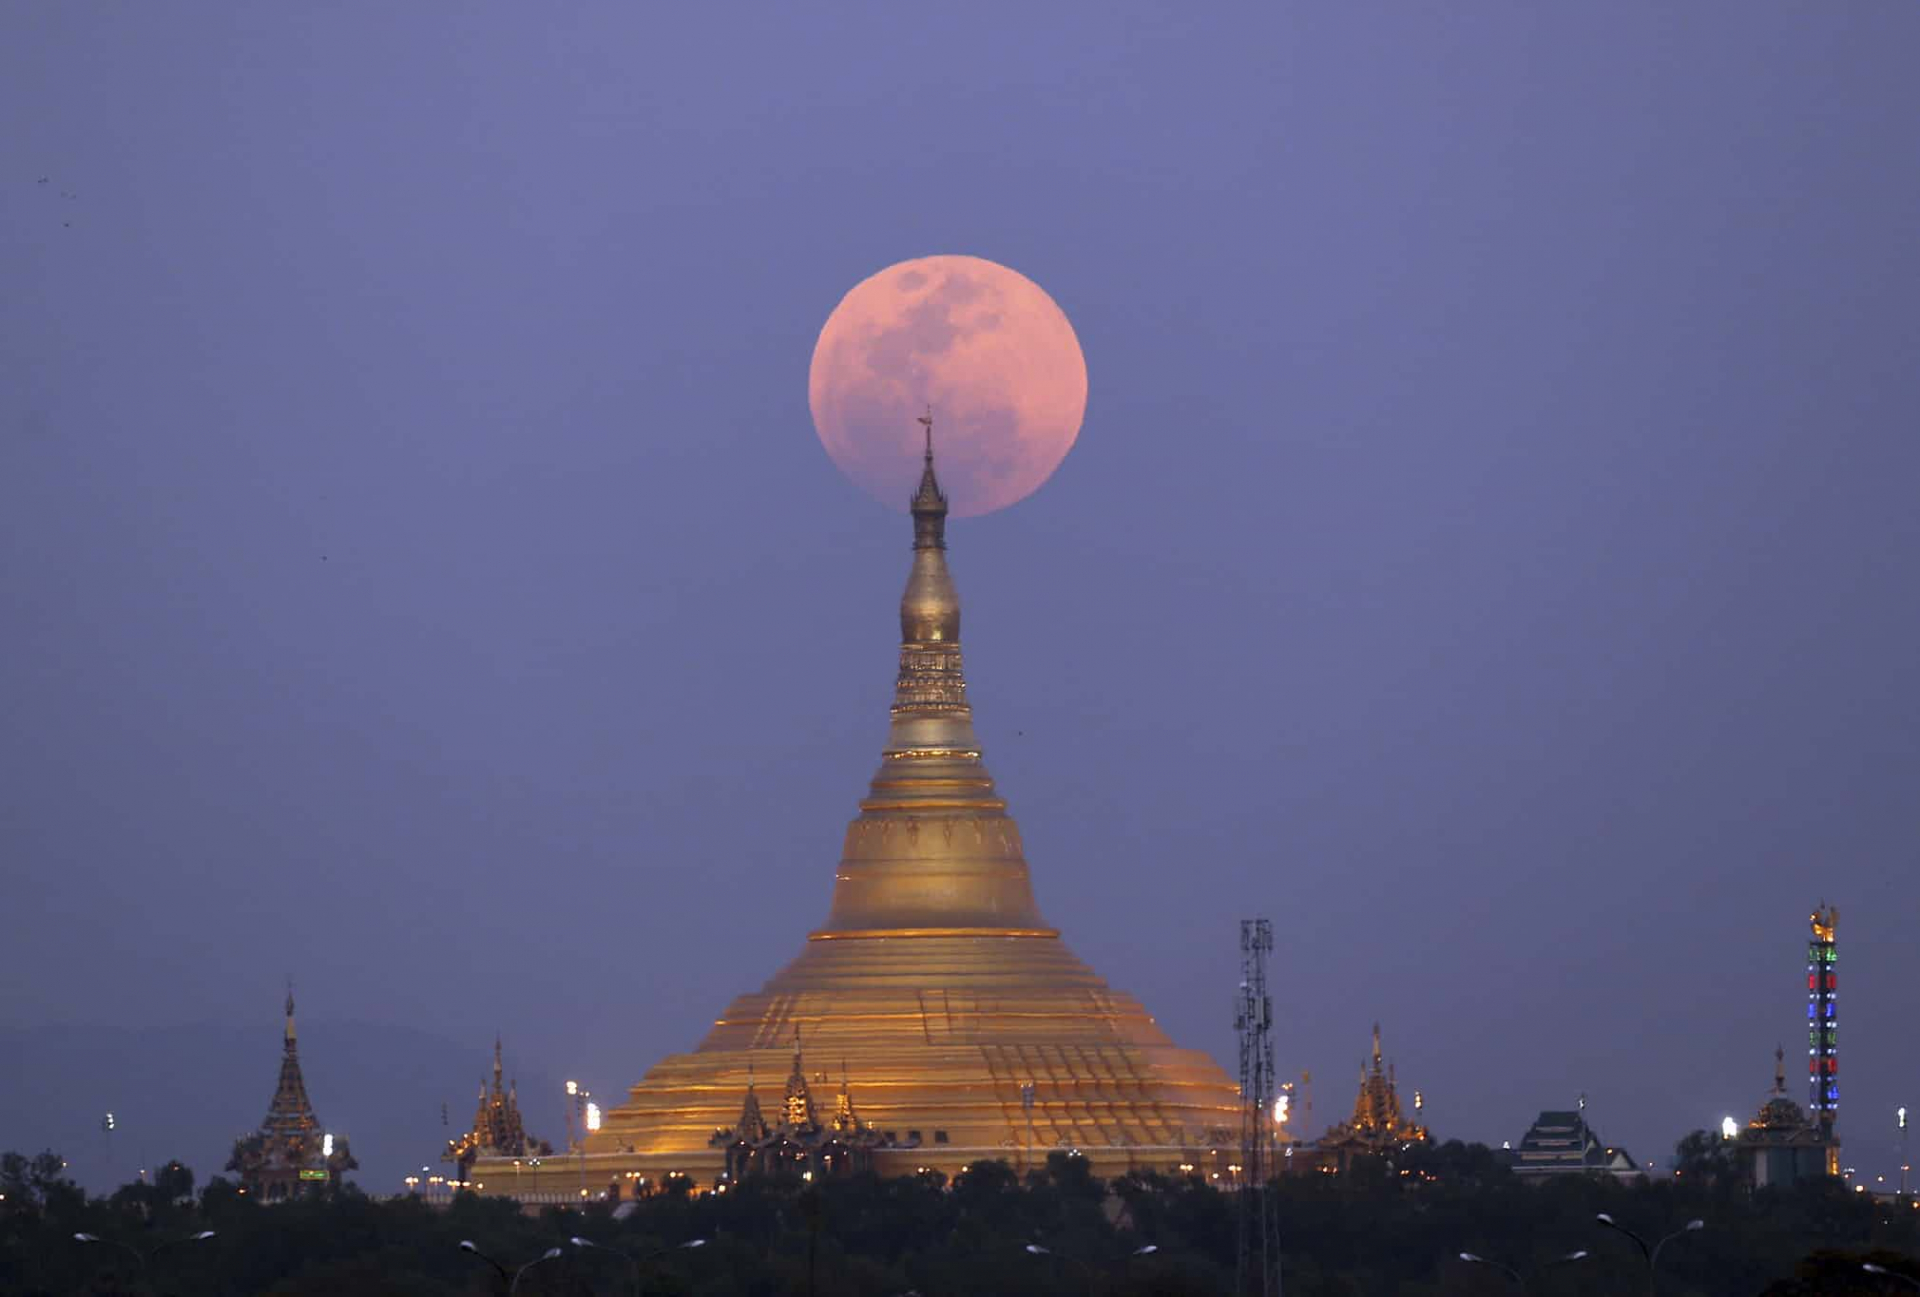 Trăng sau chùa Uppatasanti, Myanmar - Ảnh Aung Shine Oo/AP